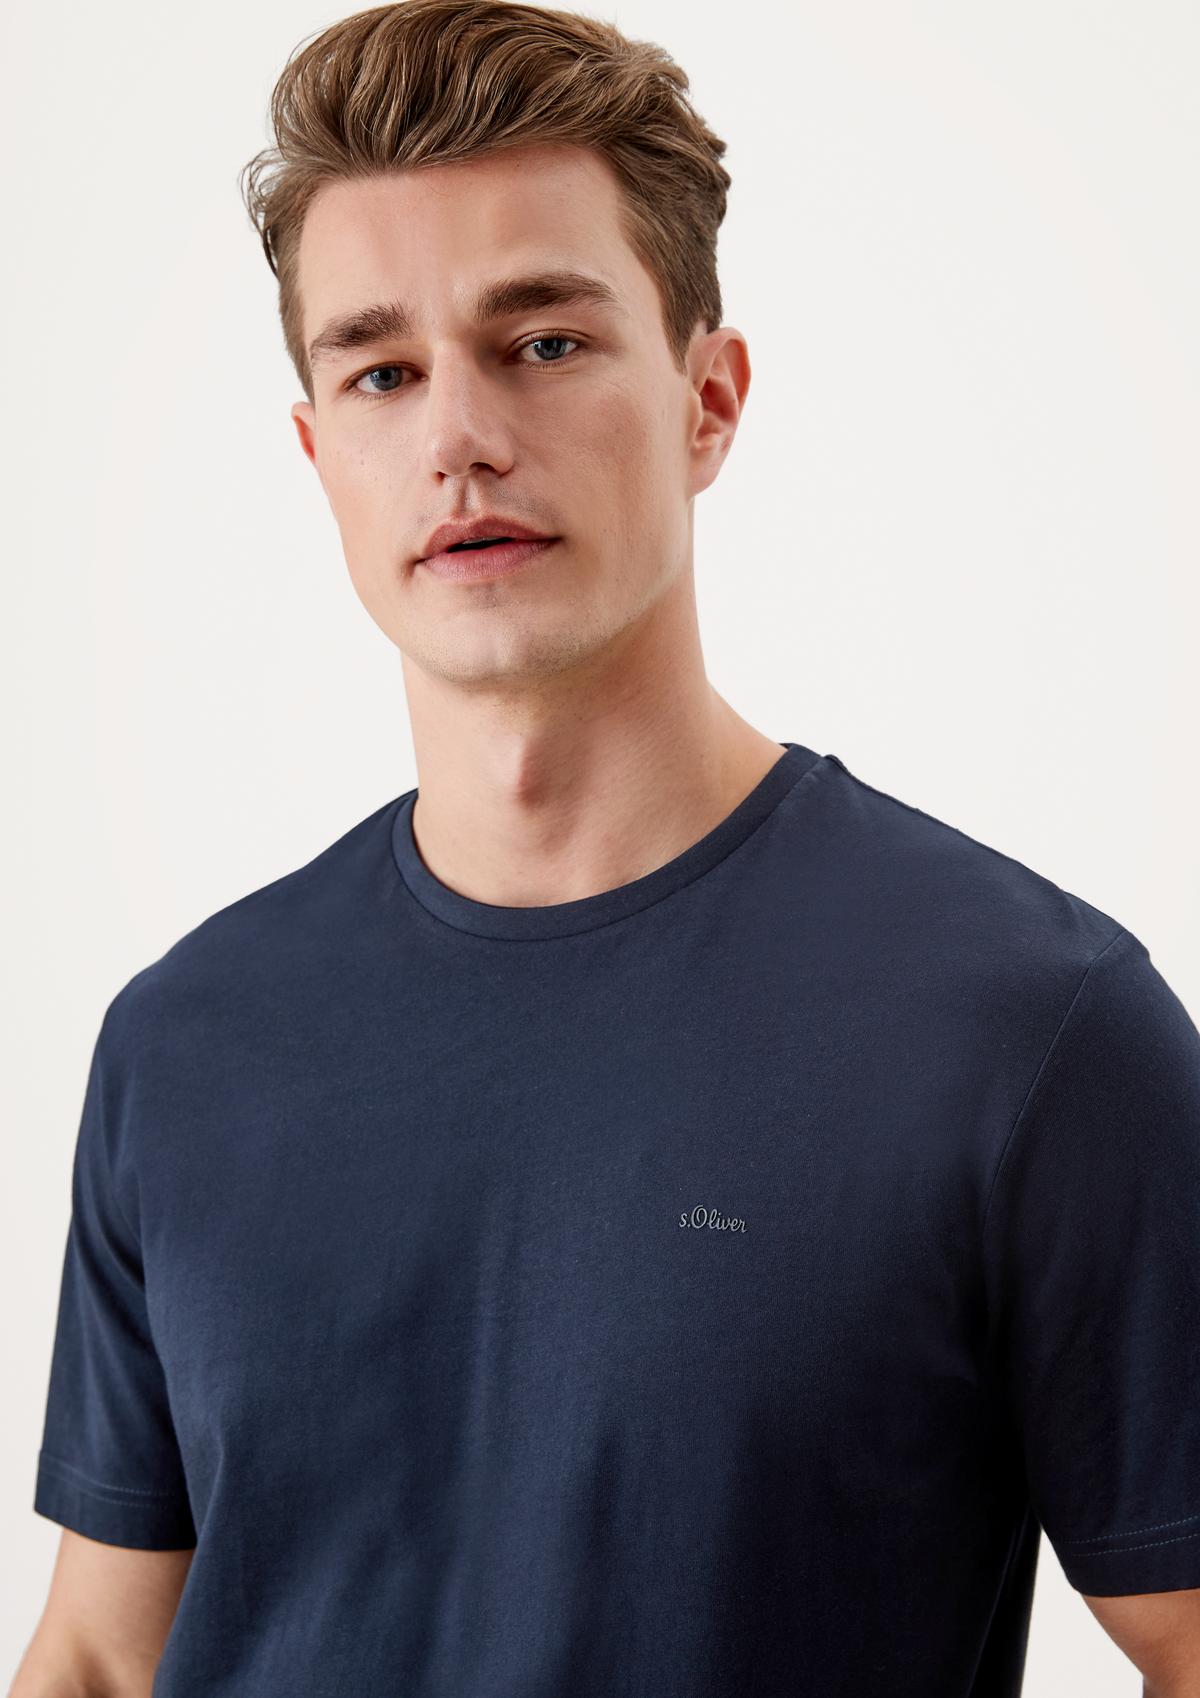 Basic T-Shirts & Long Sleeves for Men